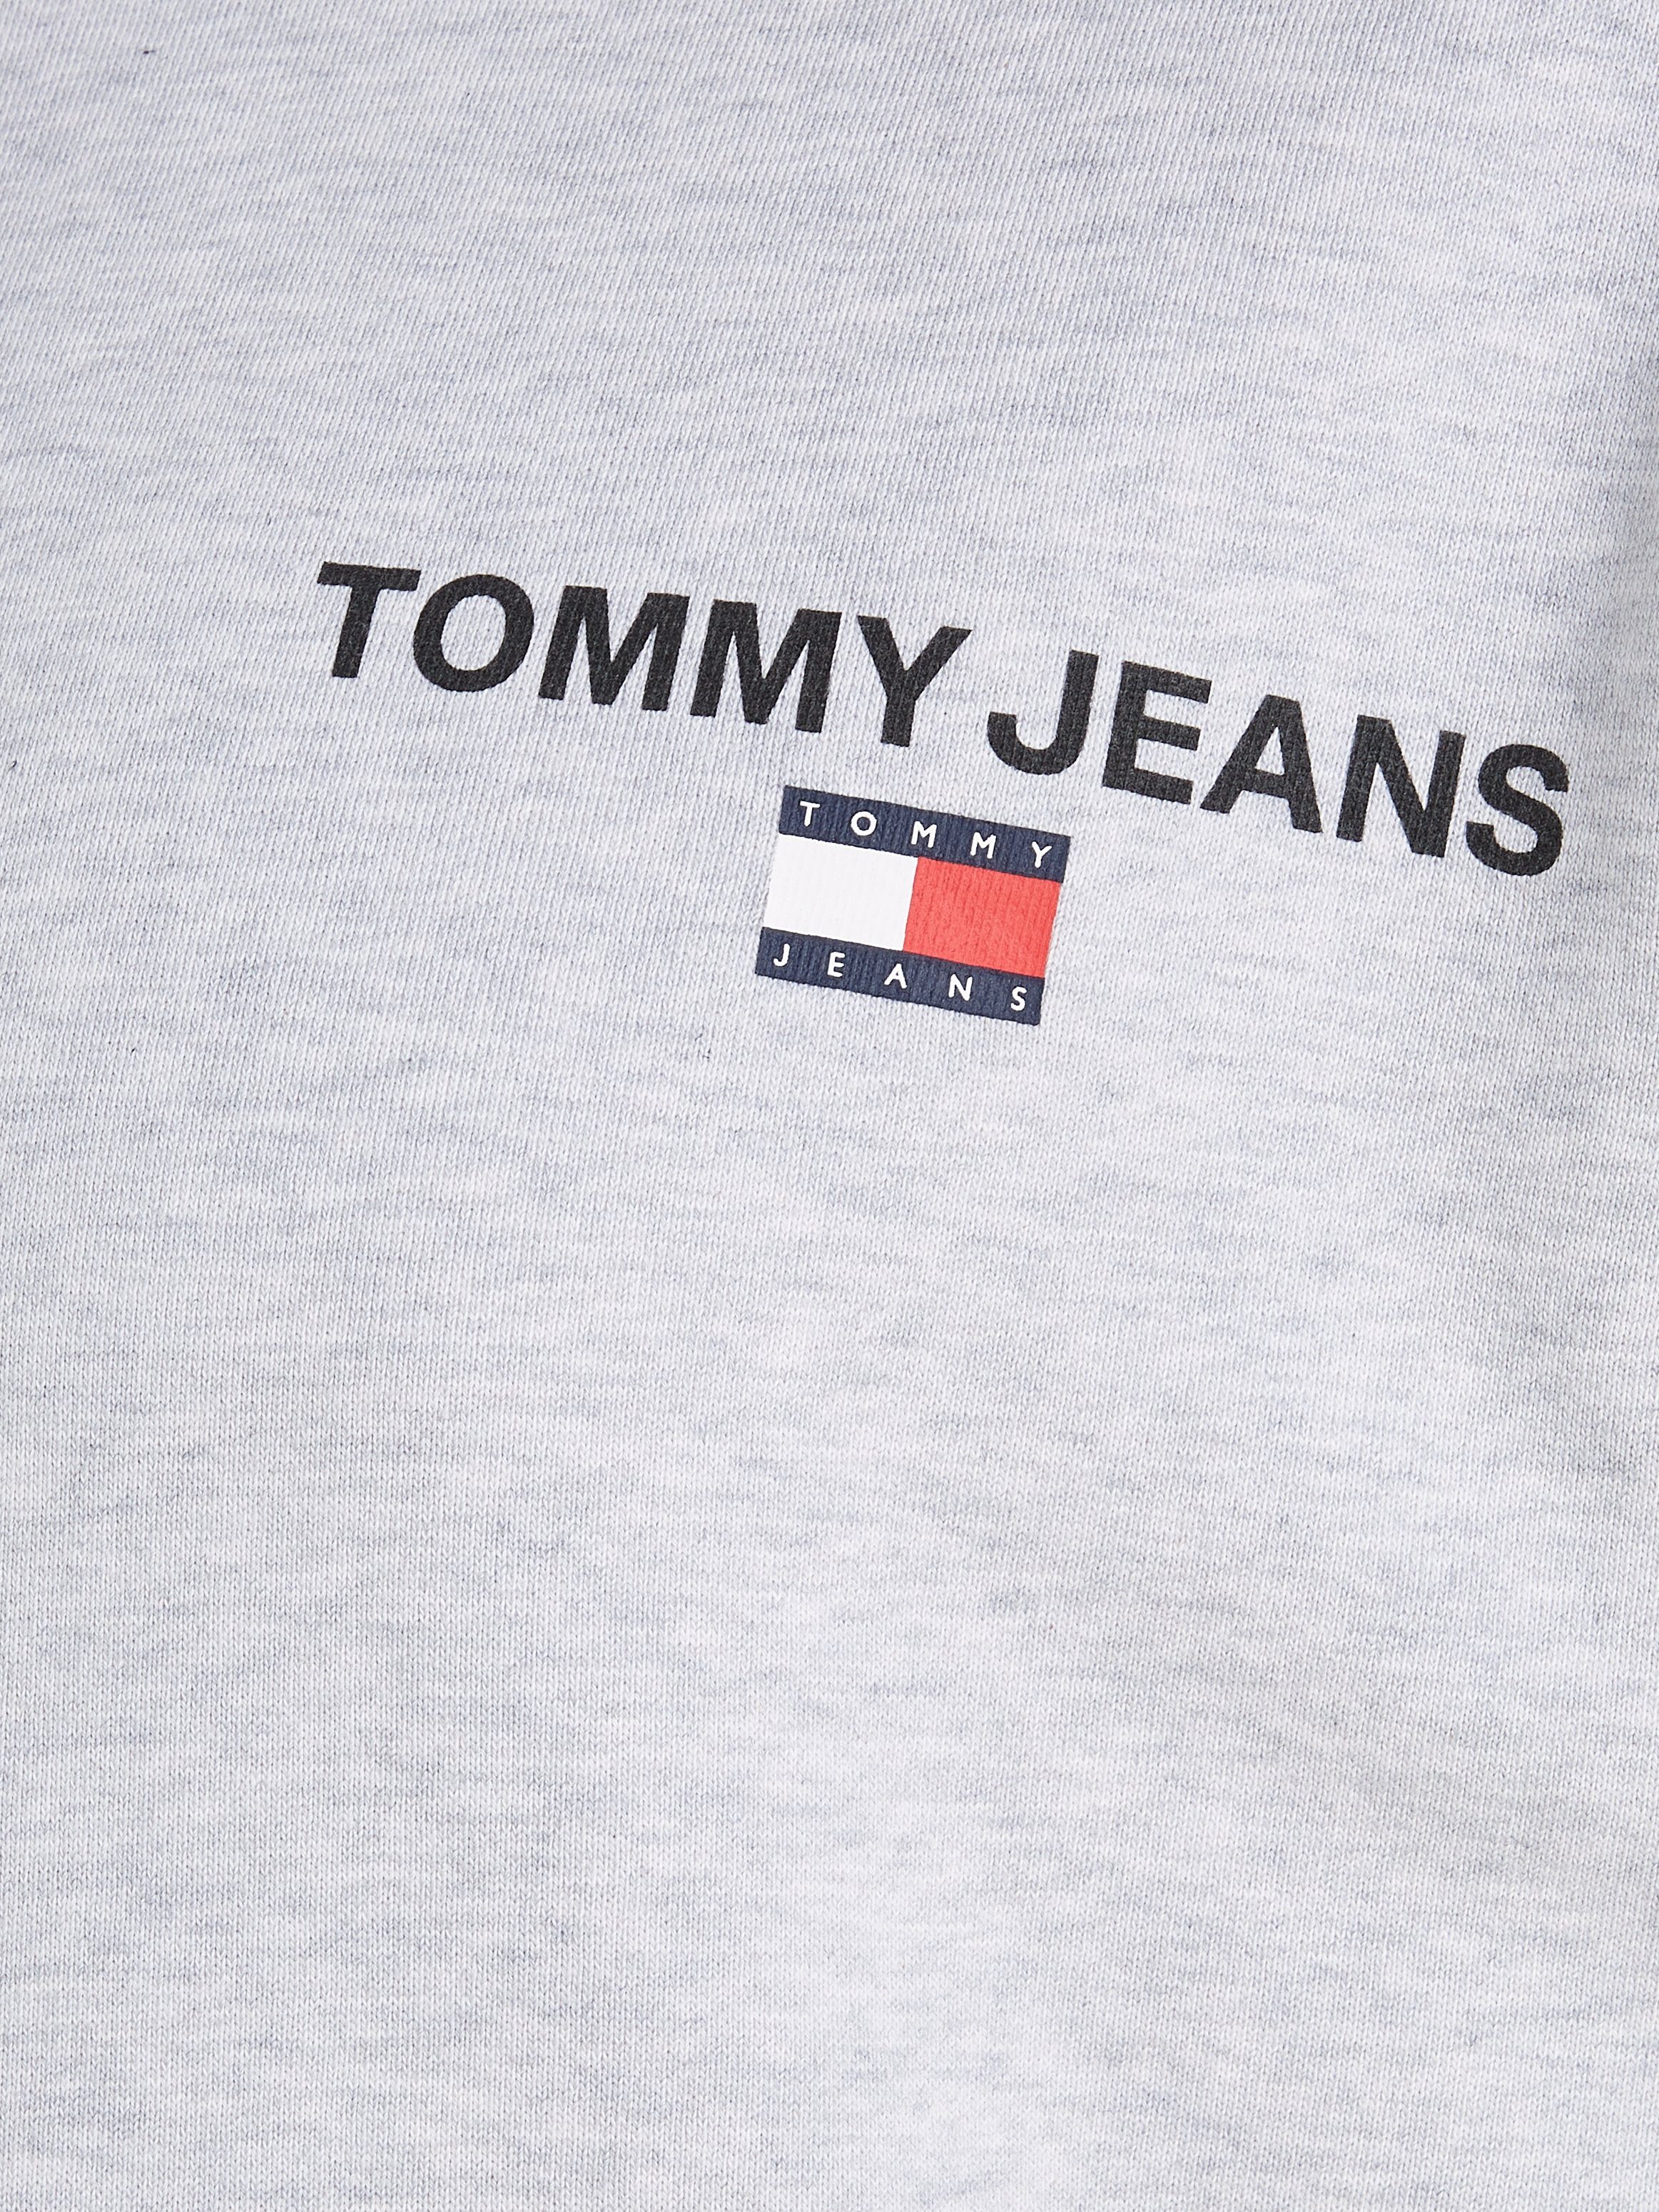 ENTRY Grey Htr Hoodie Jeans GRAPHIC HOOD Plus PLUS Tommy TJM Silver REG